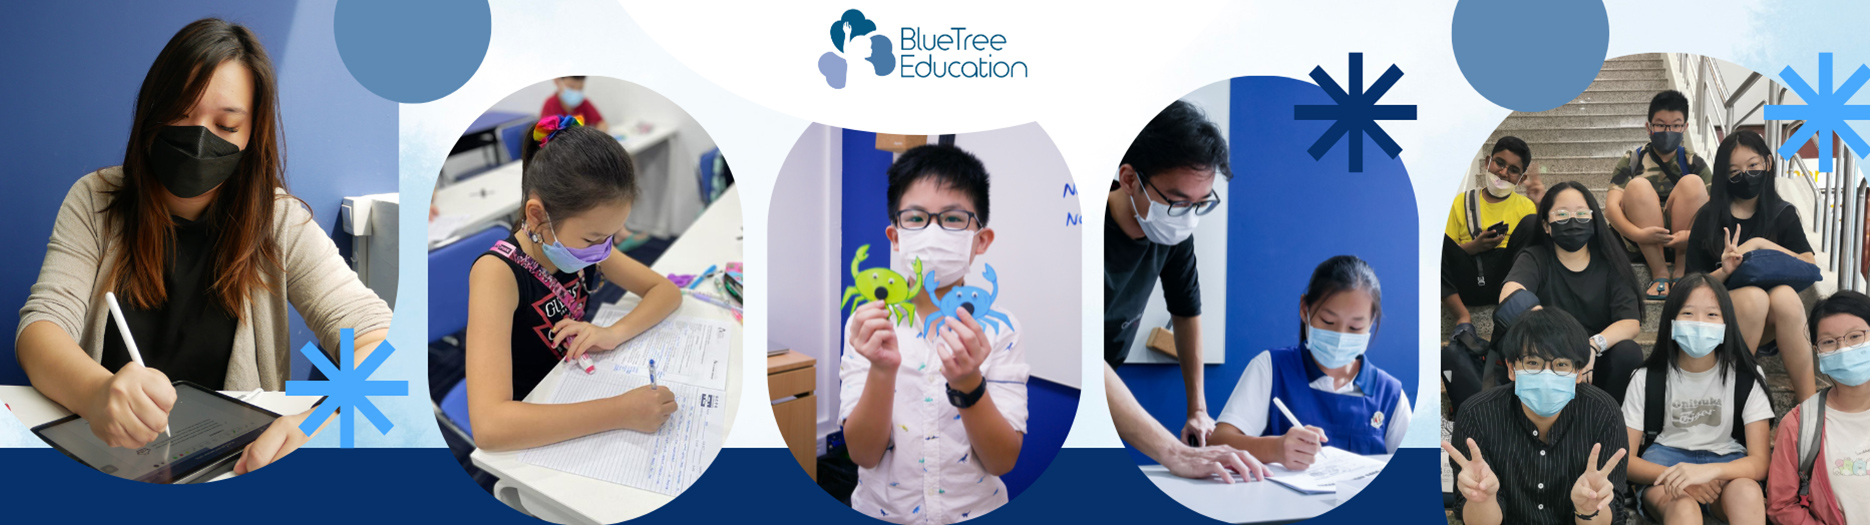 BlueTree-Education-Banner